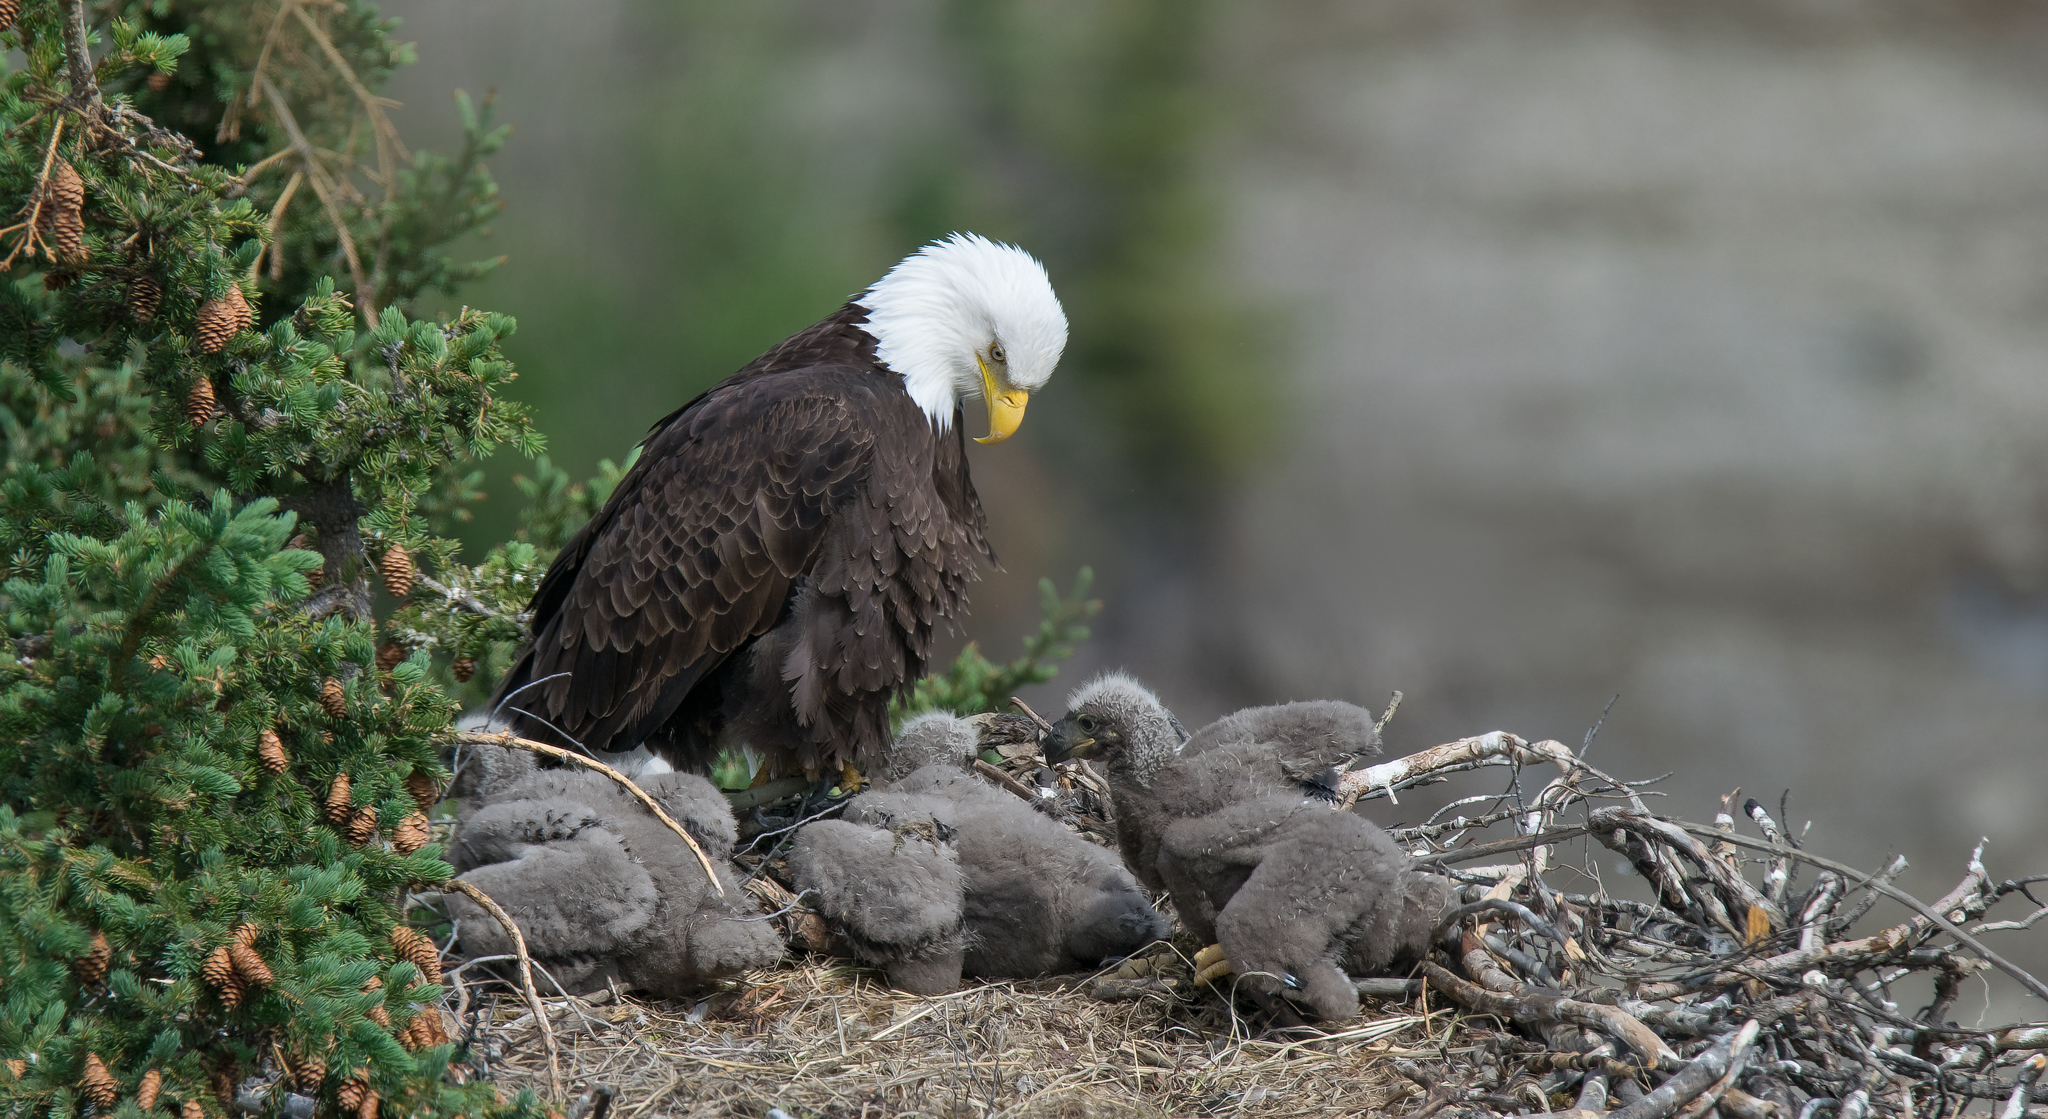 Bald eagle with eaglets